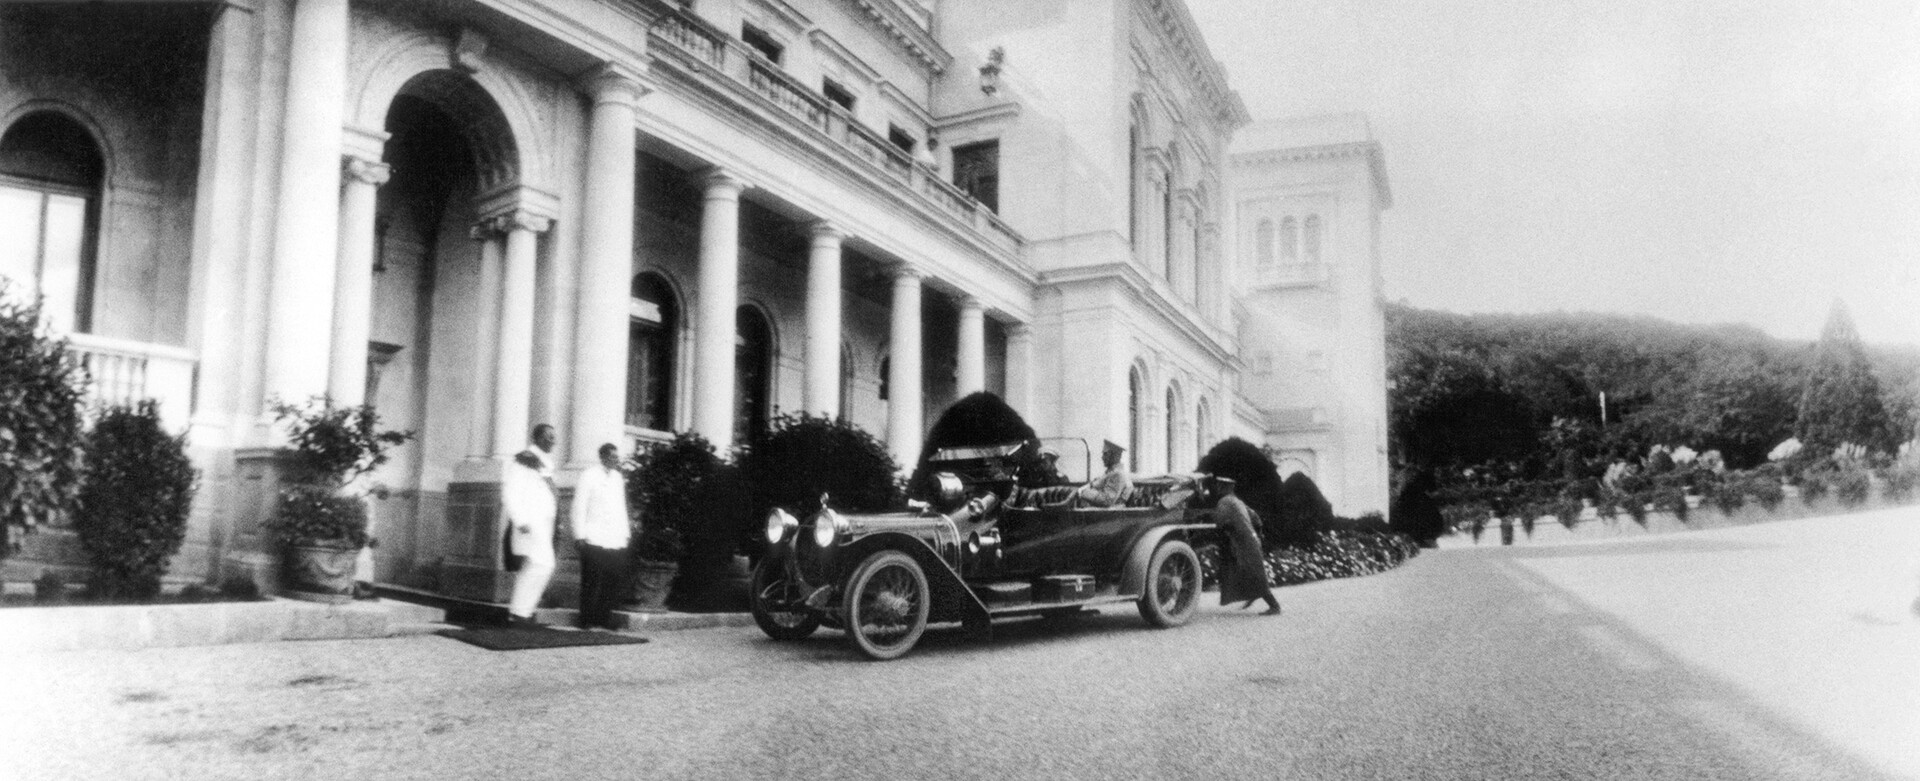 Николай II выходит из автомобиля у Ливадийского дворца